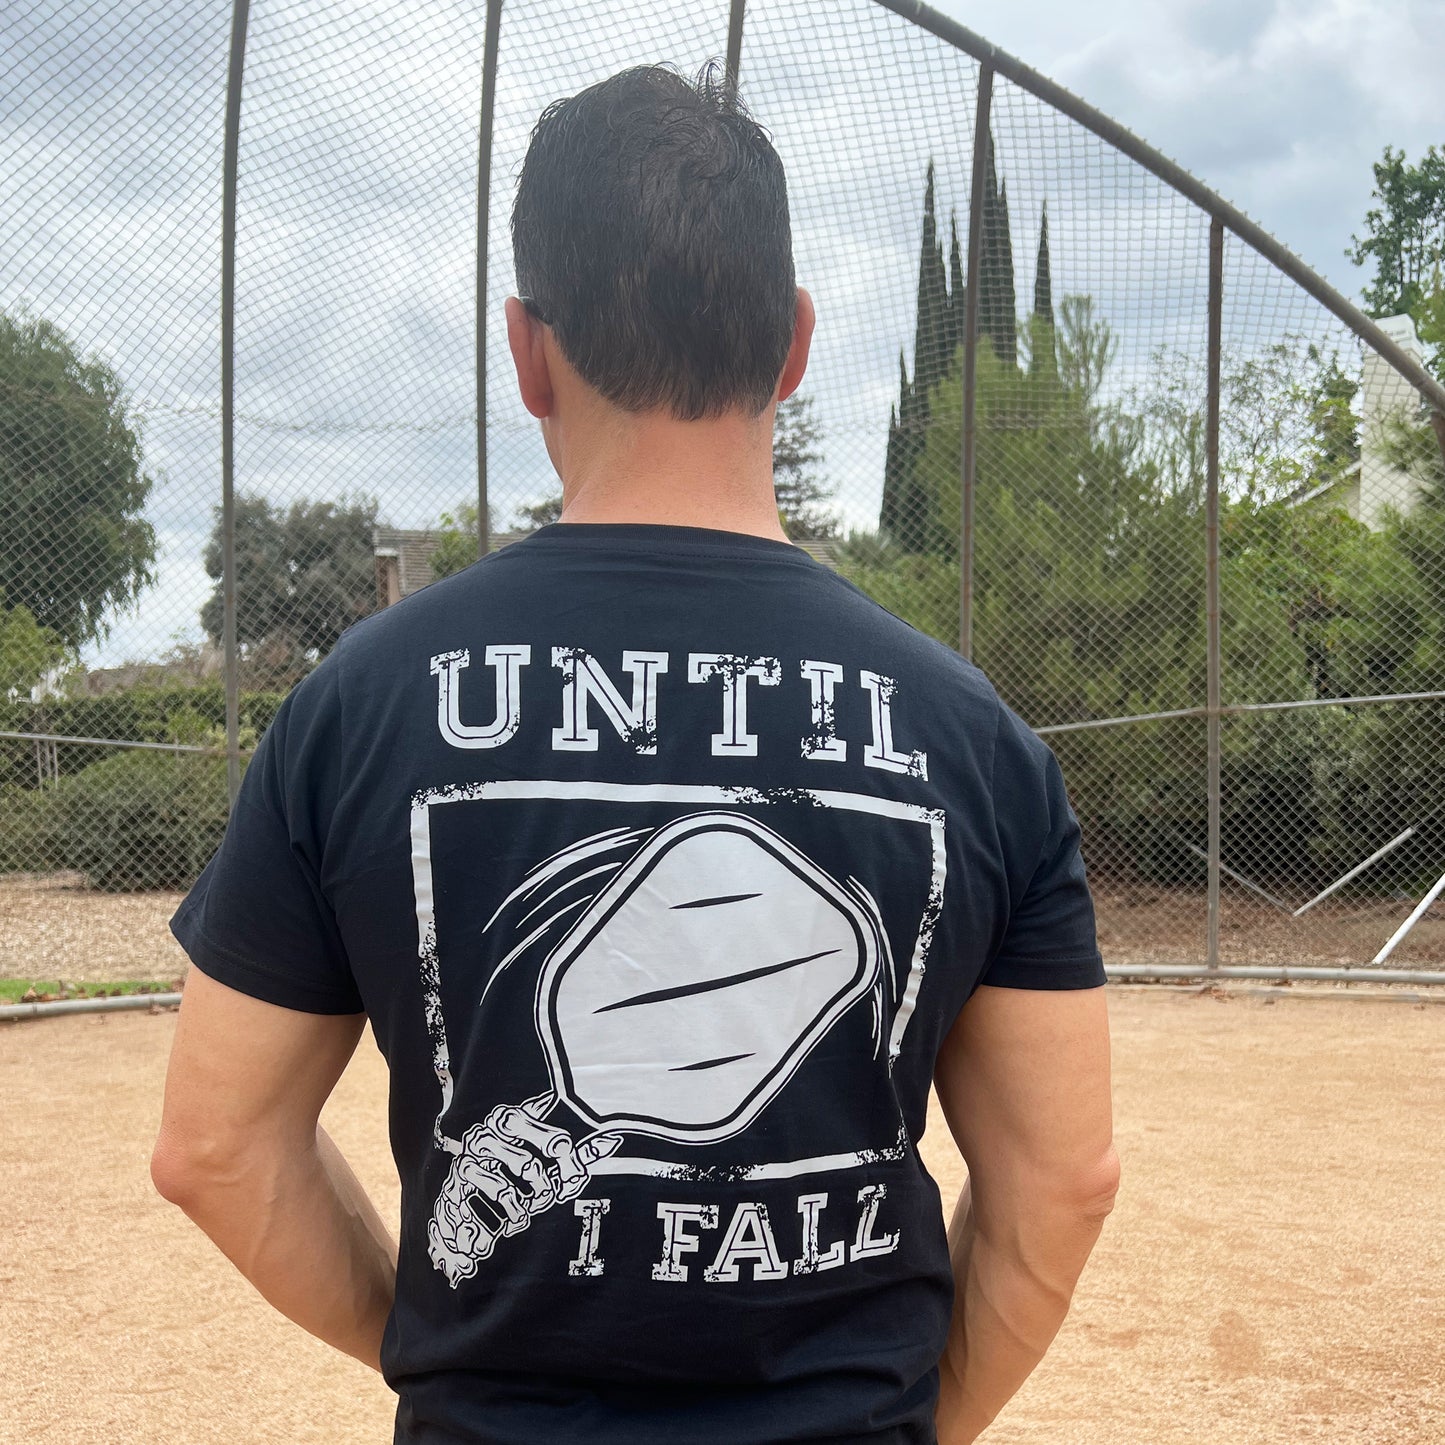 Until I Fall Pickleball T-Shirt - Back Angle - Baseball Field